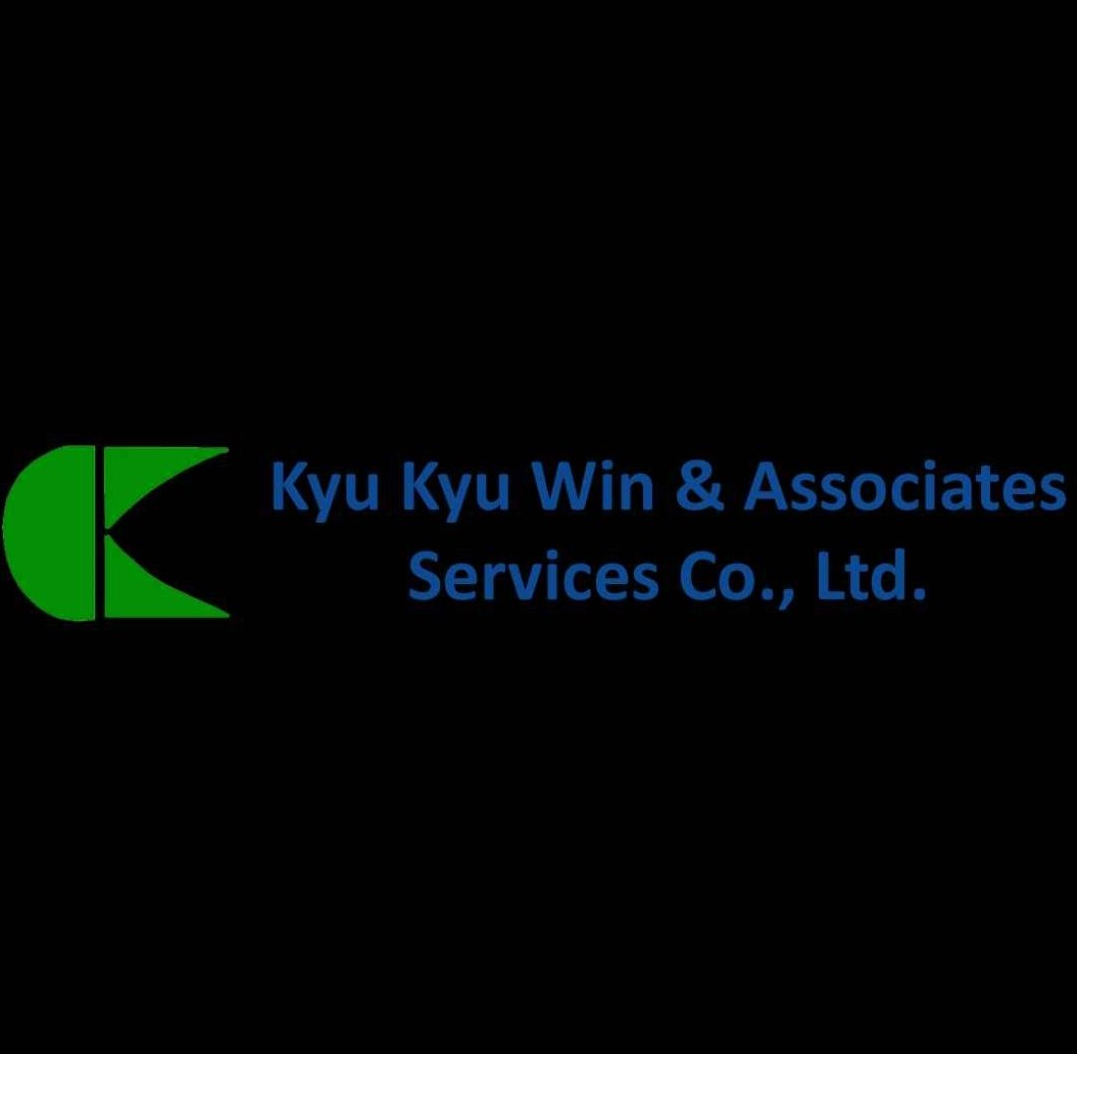 Kyu Kyu win & Associates